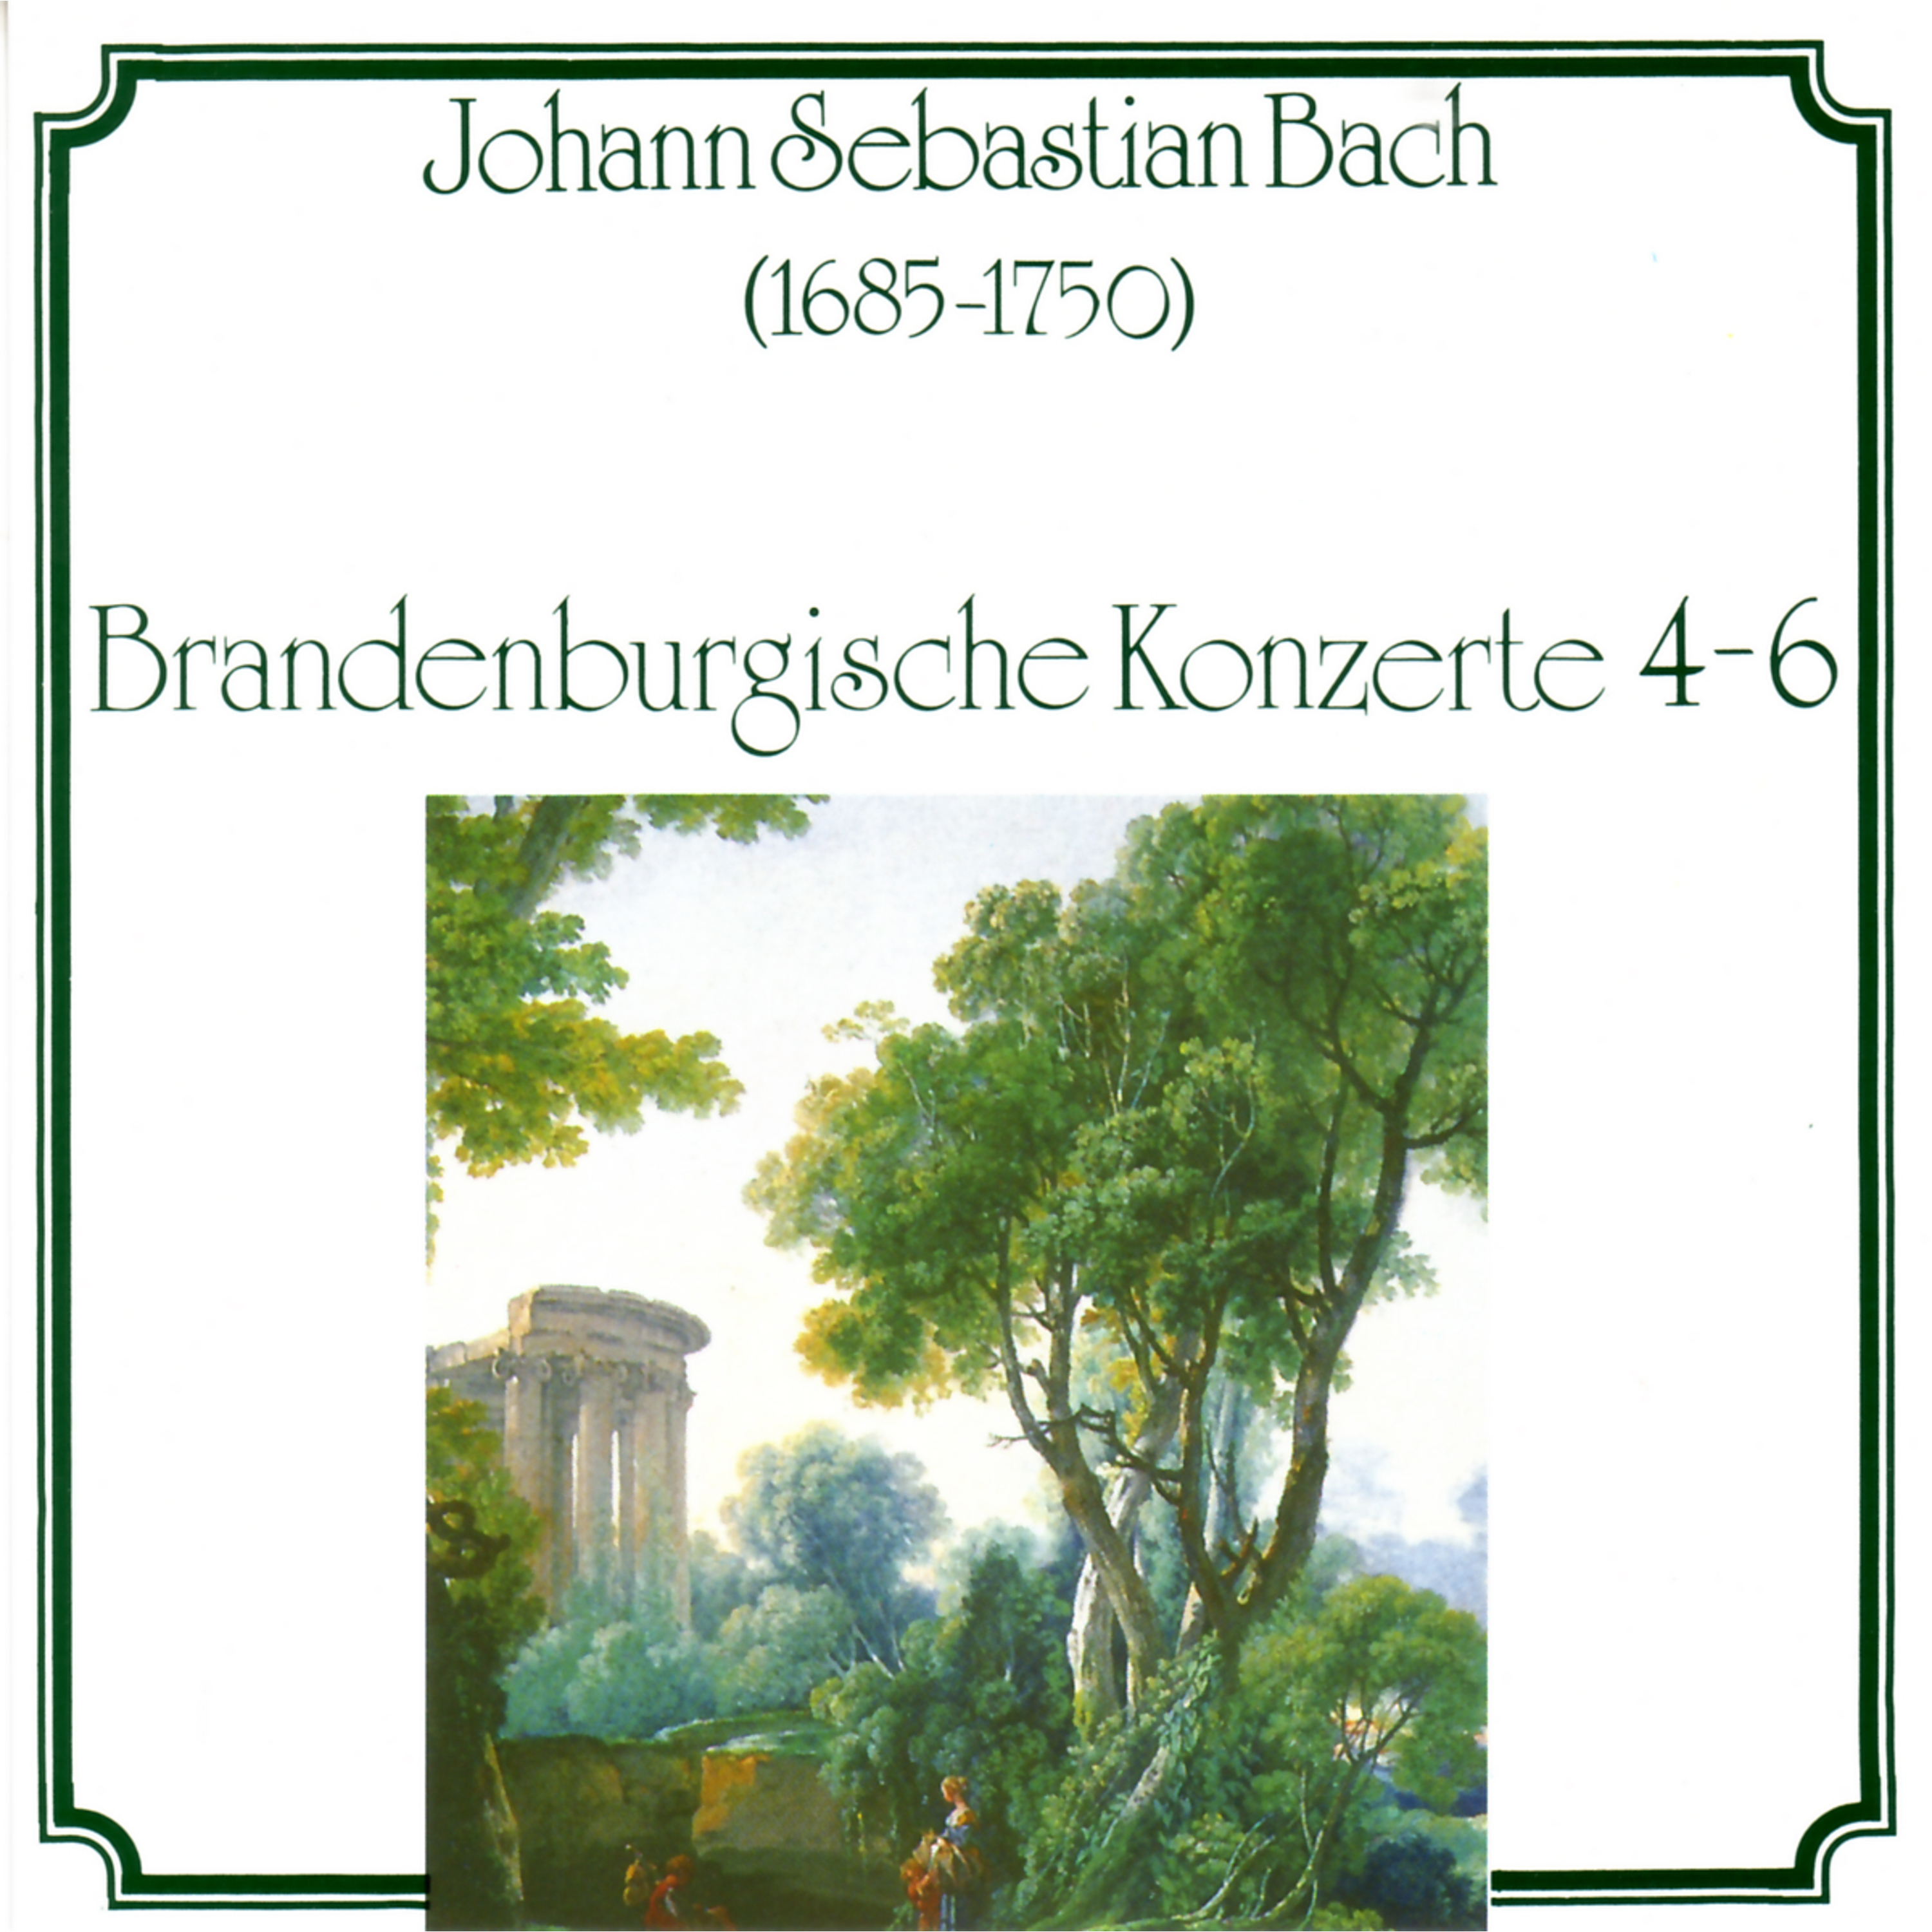 Brandenburgisches Konzert No. 5 in D Major, BWV 1050: I. Allegro